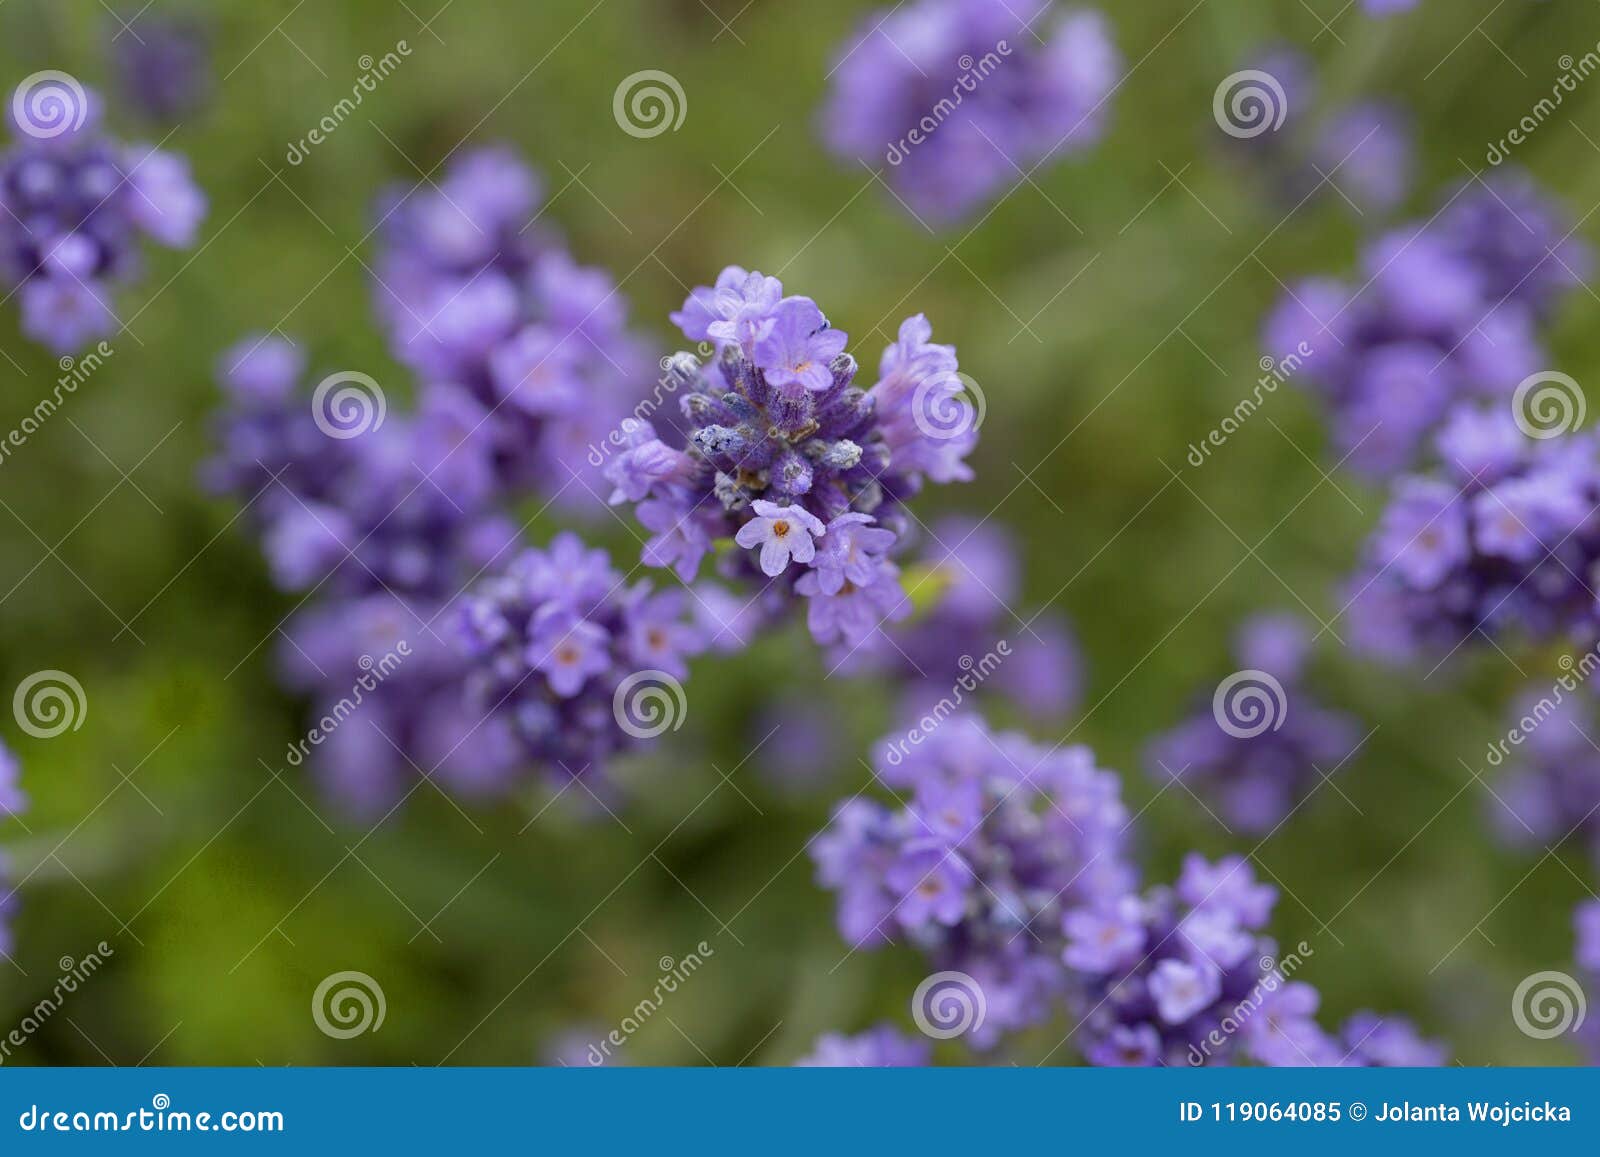 lavender flowers blooming in the garden, beautiful lavender field